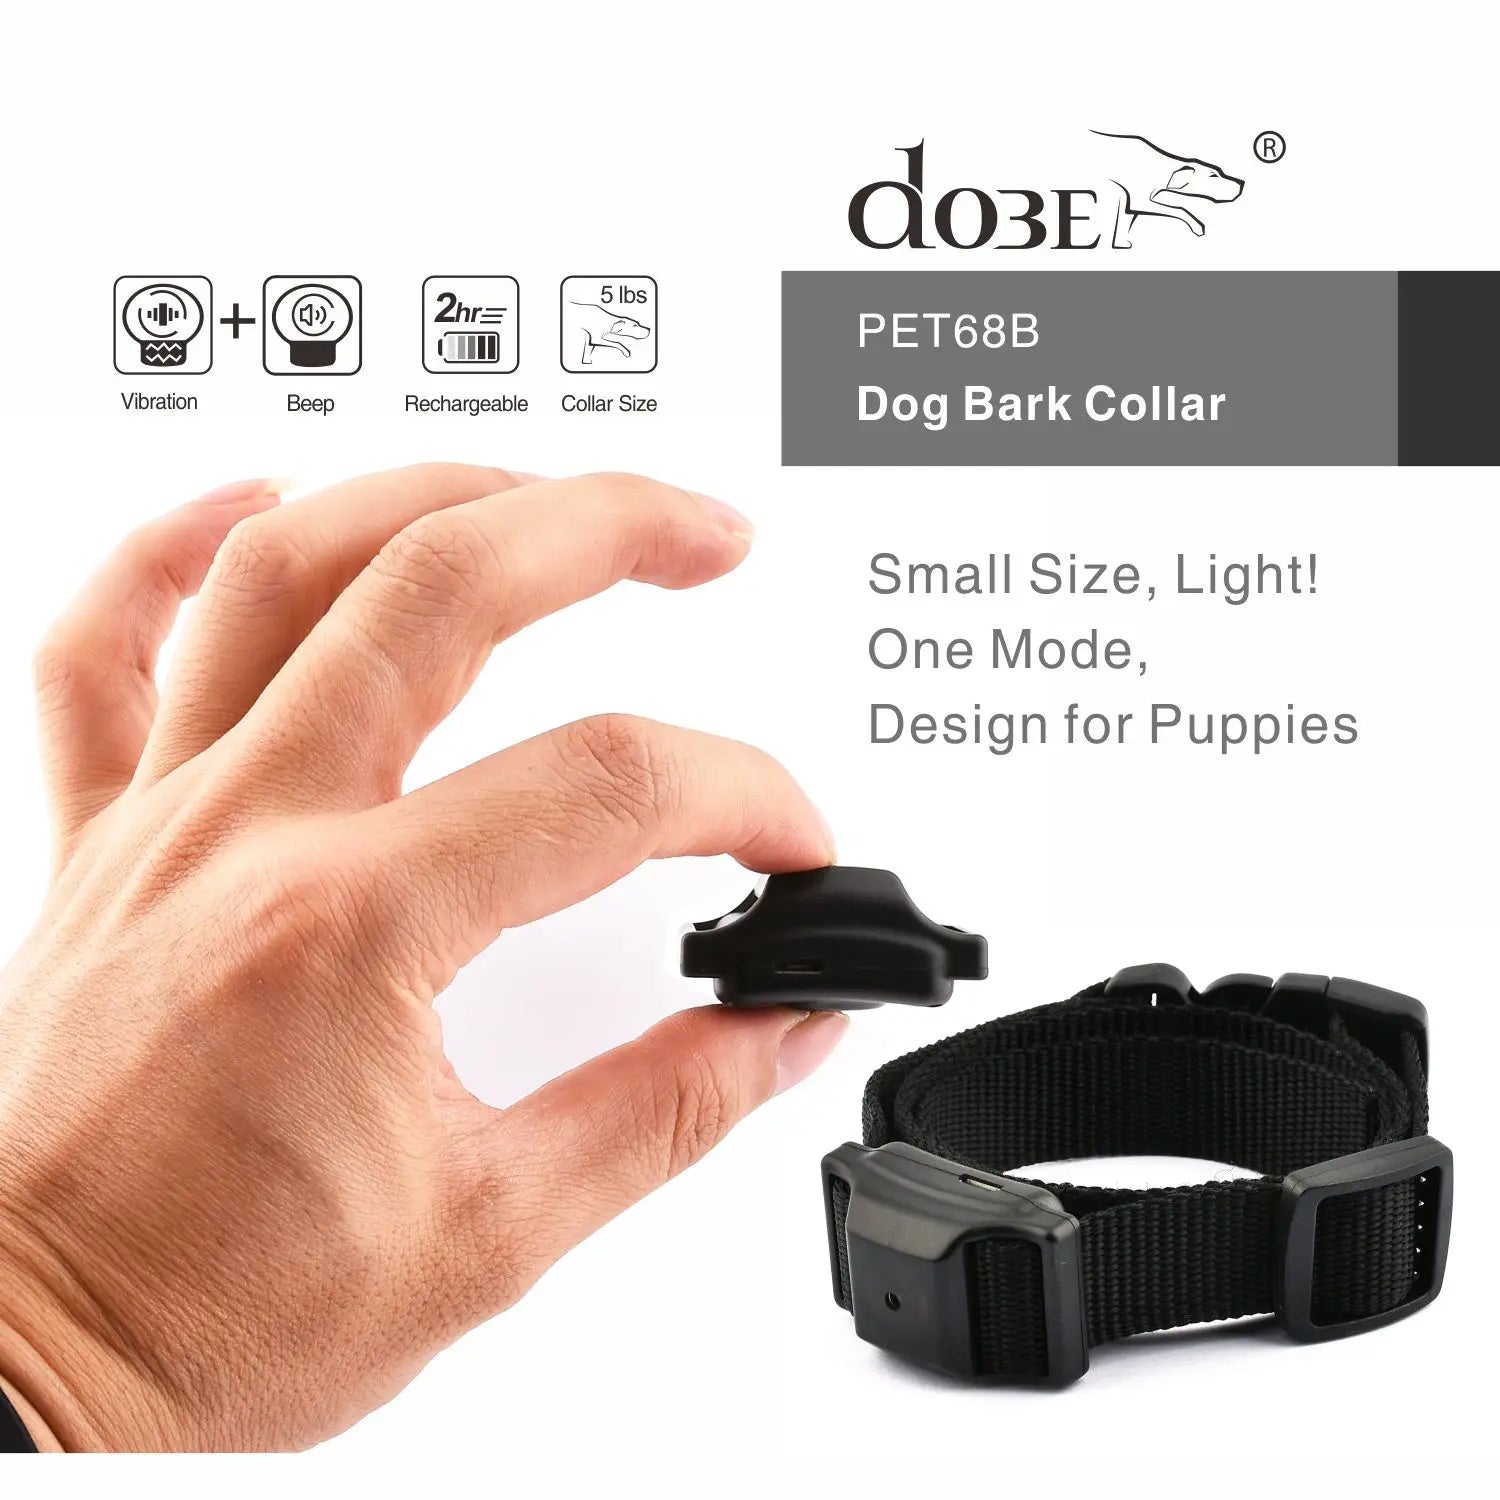 Dog Bark Control Collar: Humane Training Solution with Adjustable Sensitivity Levels  petlums.com   